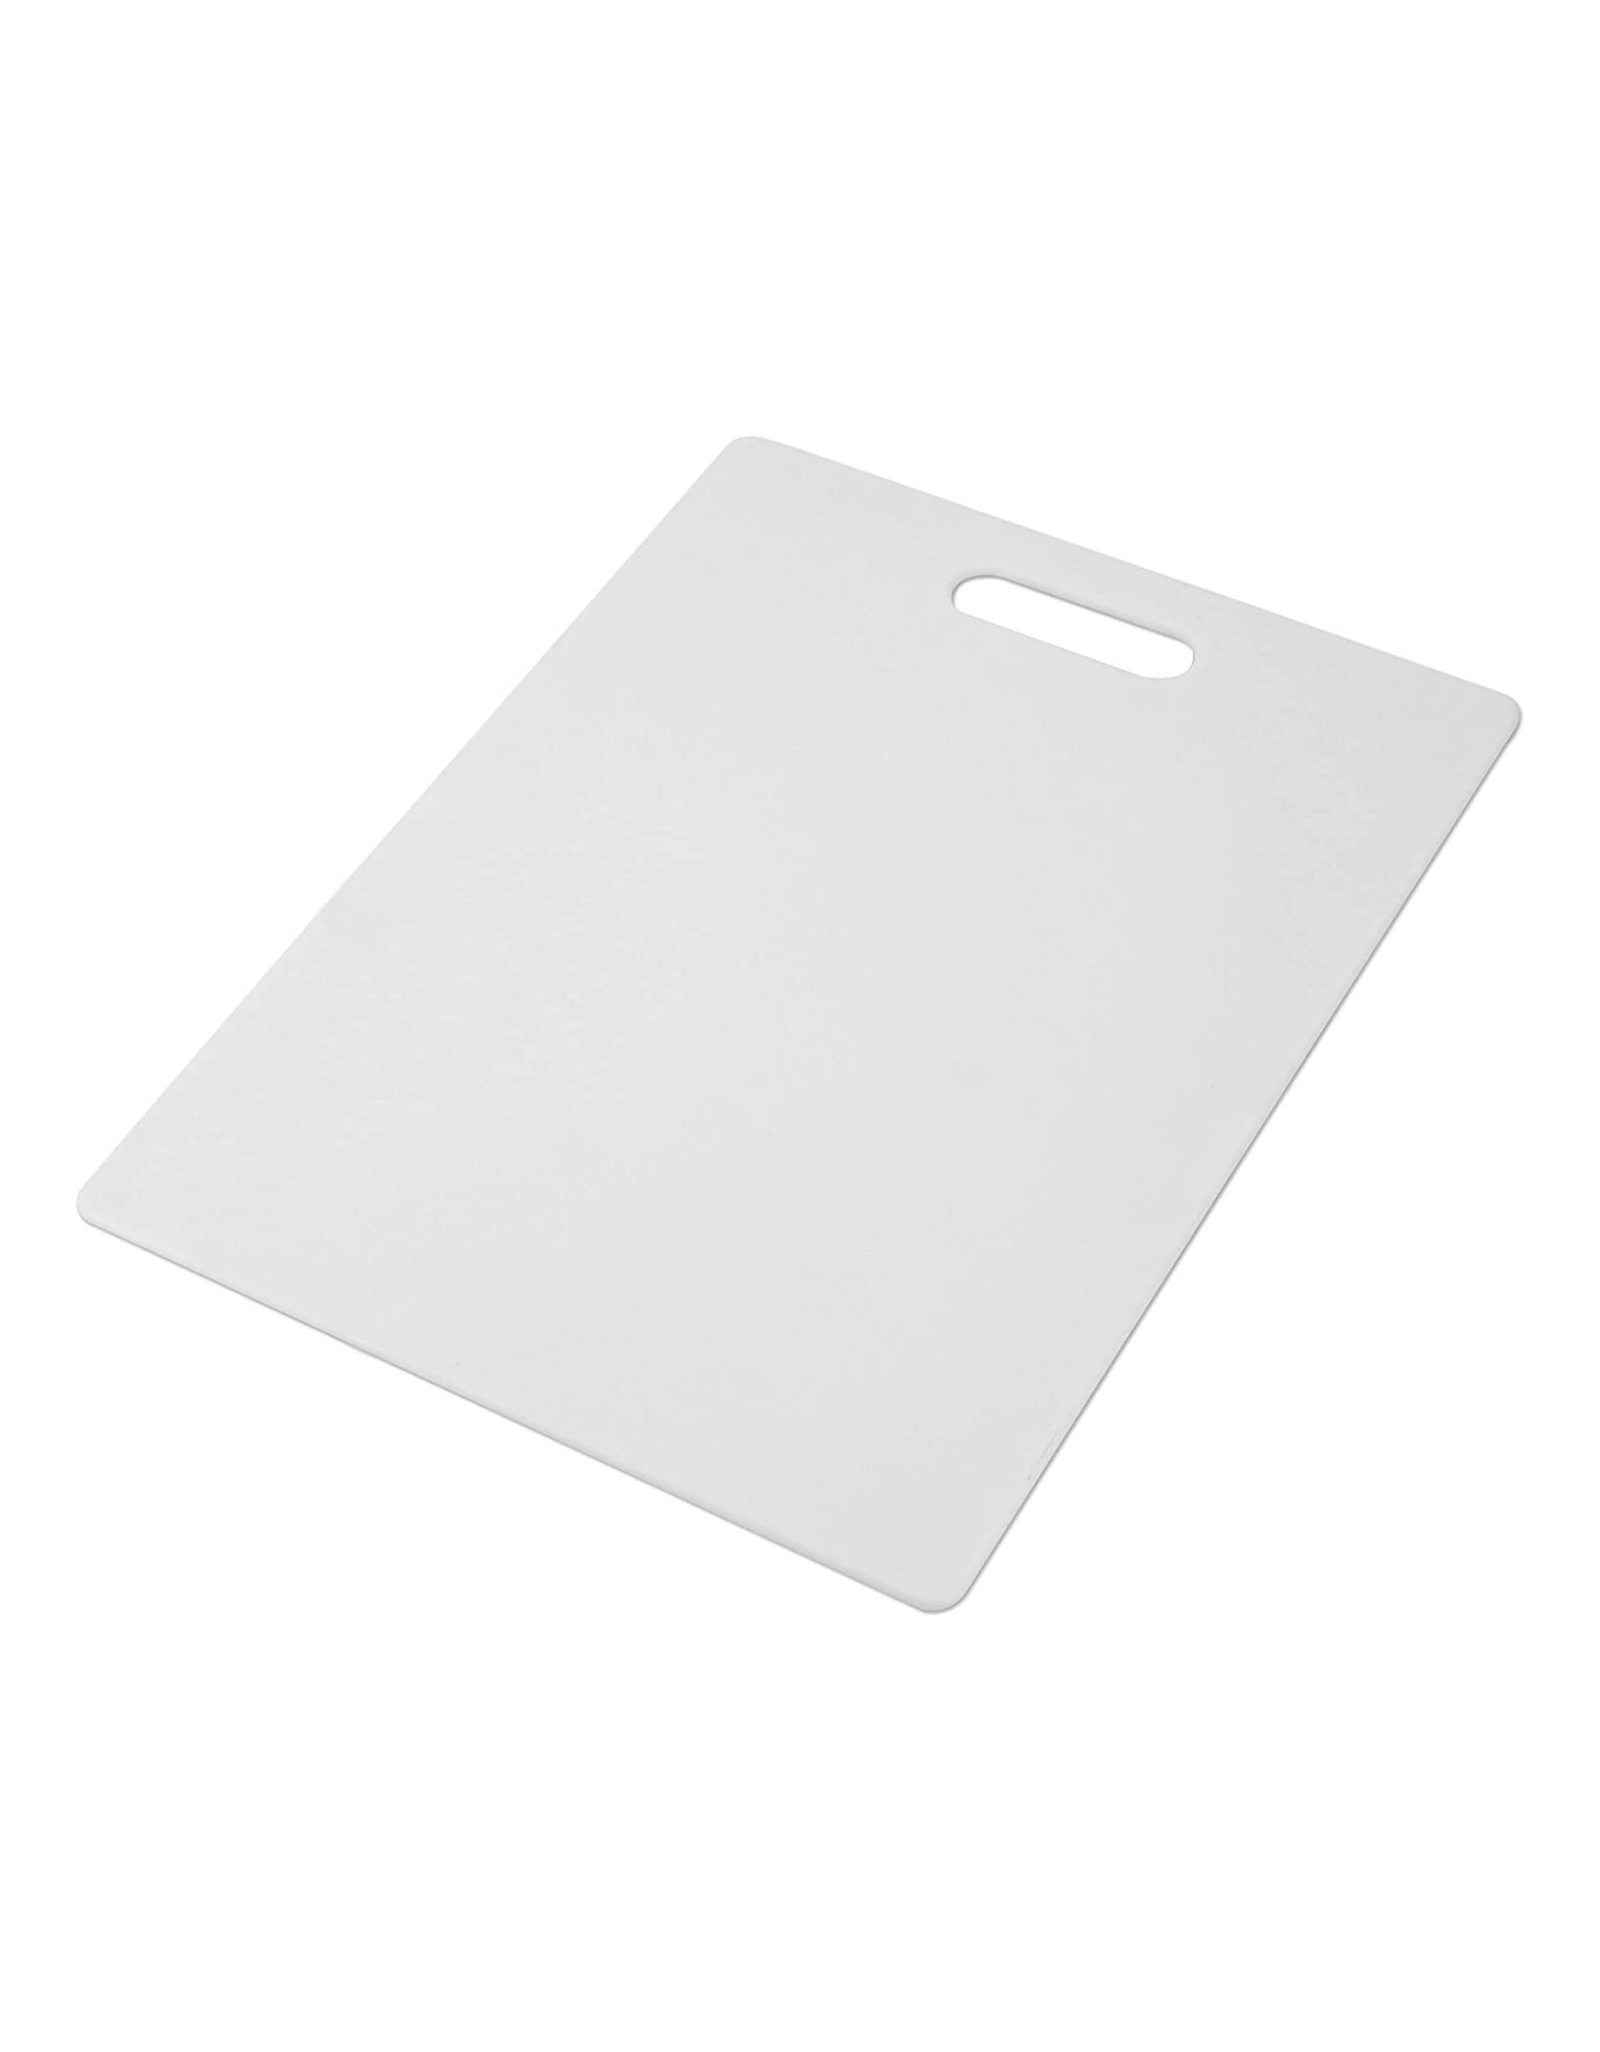 Farberware - 78892-10 Plastic Cutting Board, 11 Inch by 14 Inch, White